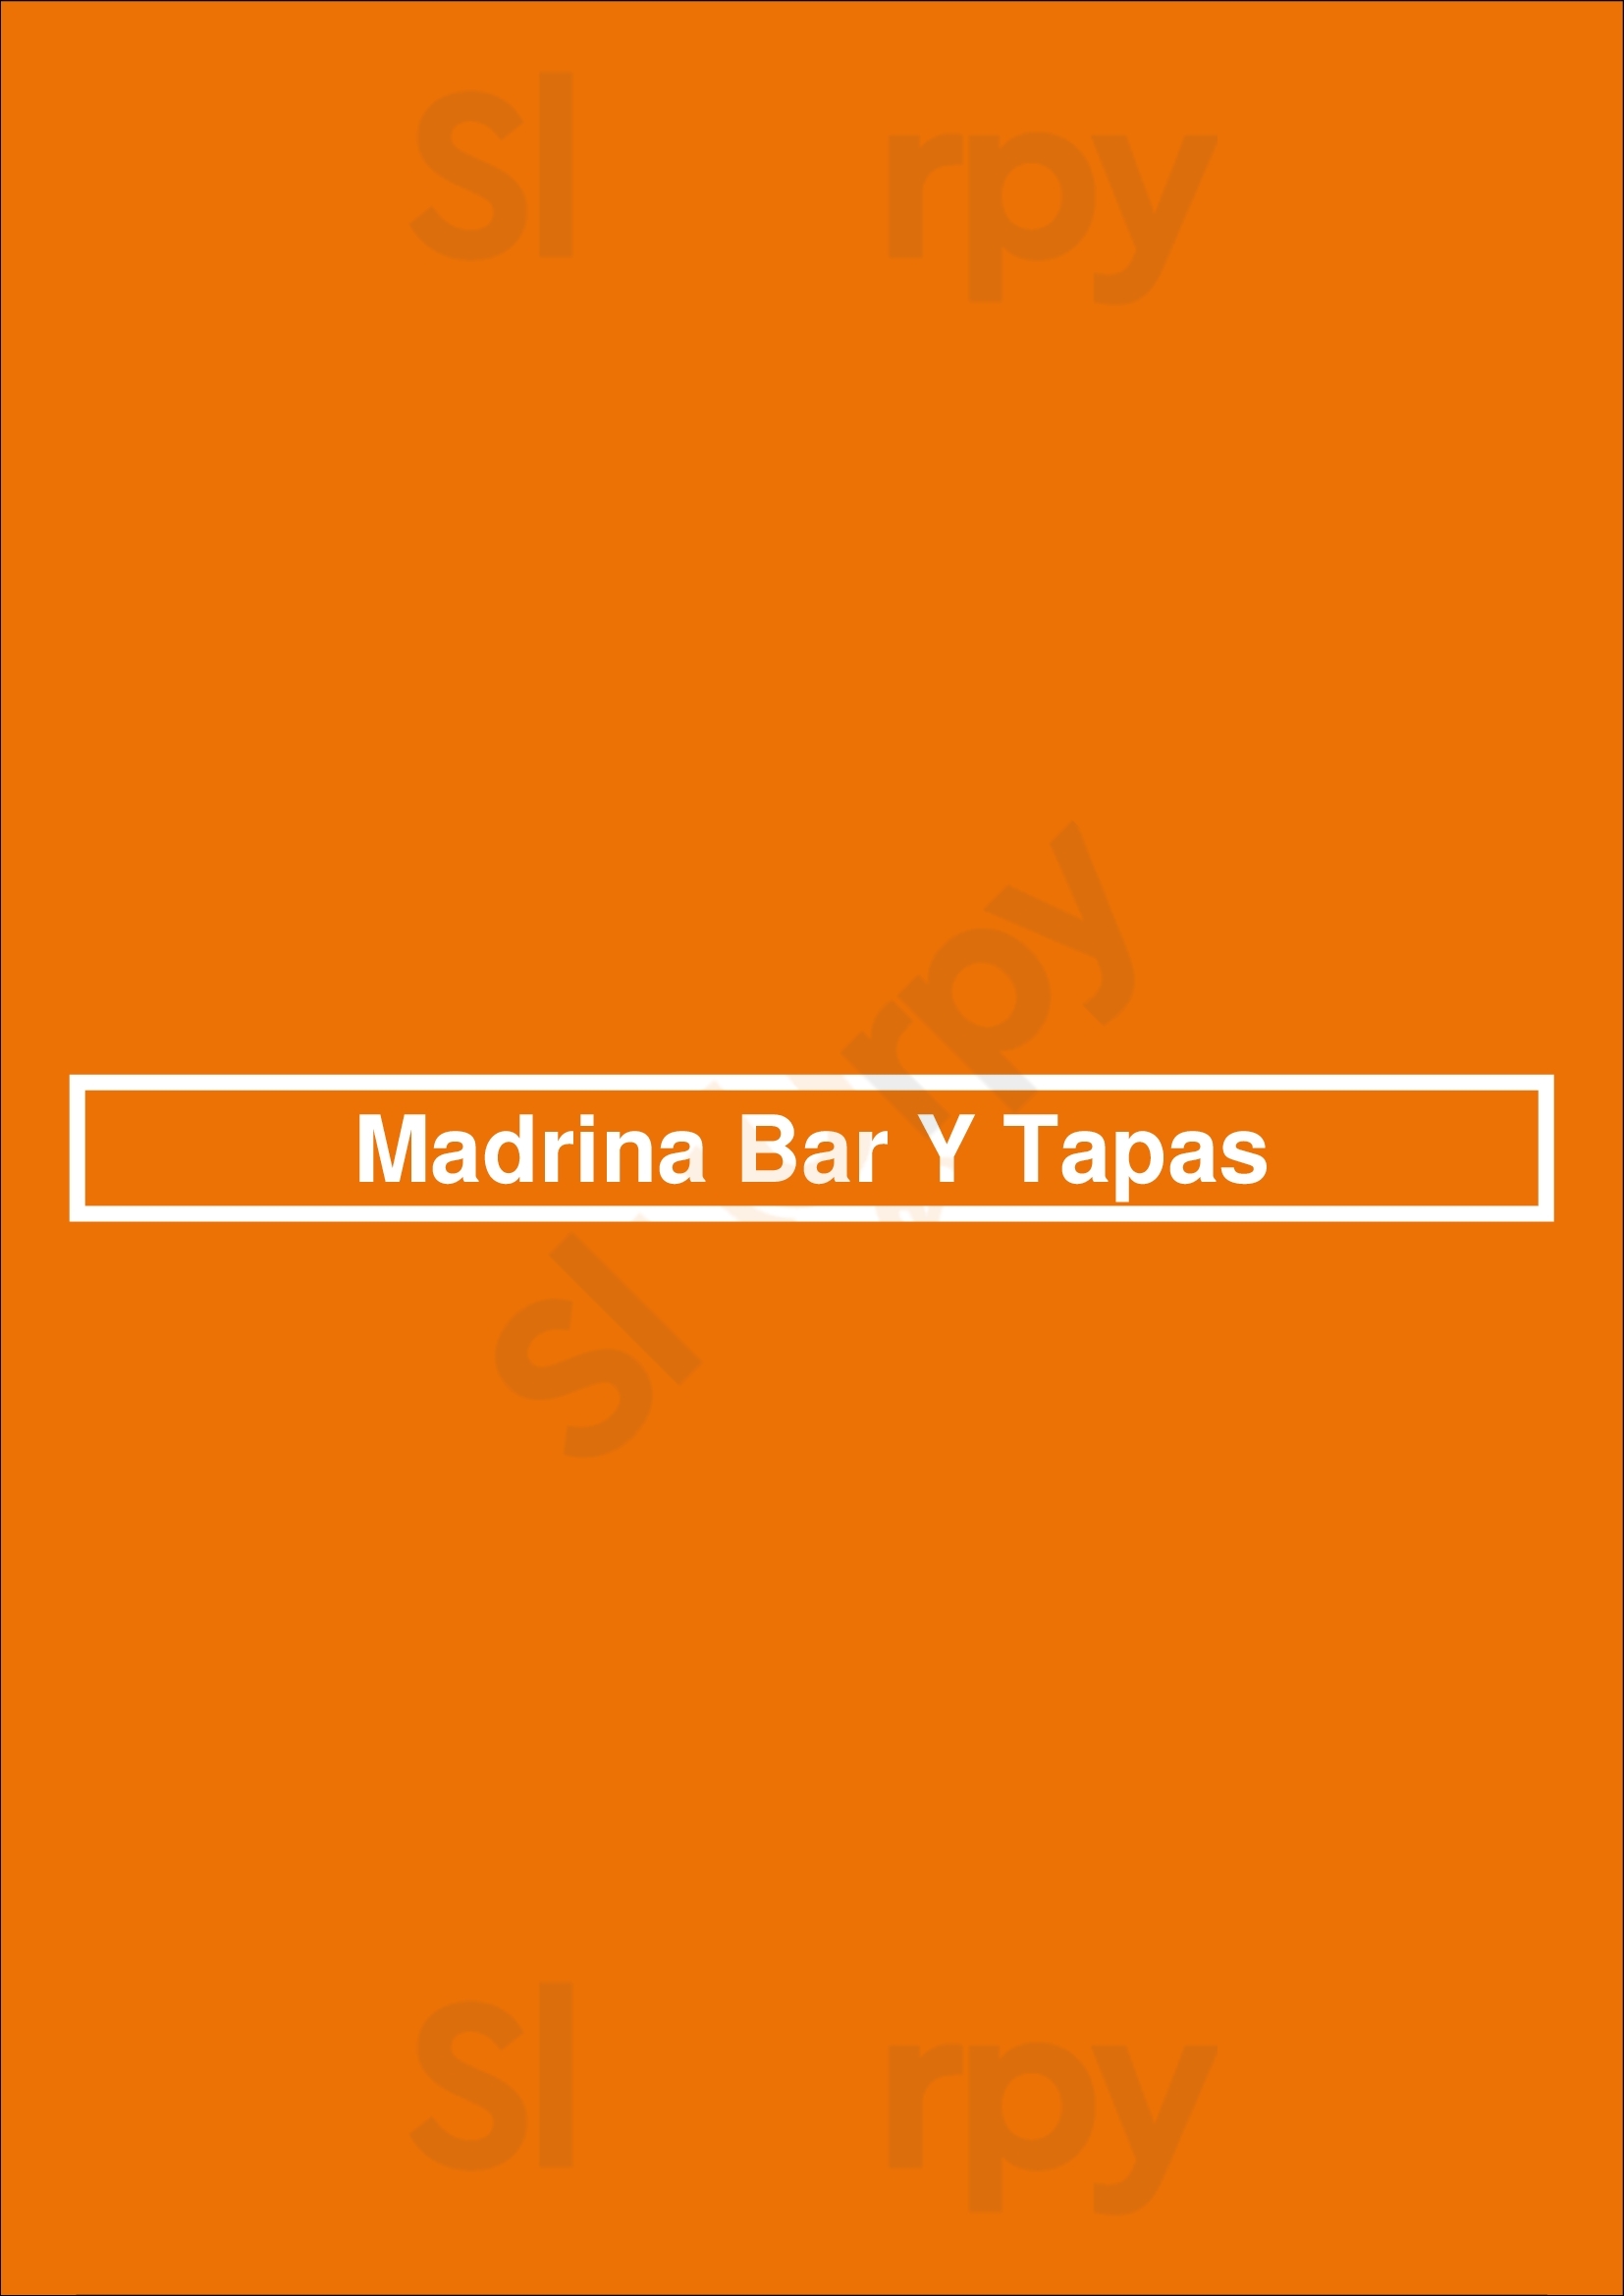 Madrina Bar Y Tapas Toronto Menu - 1